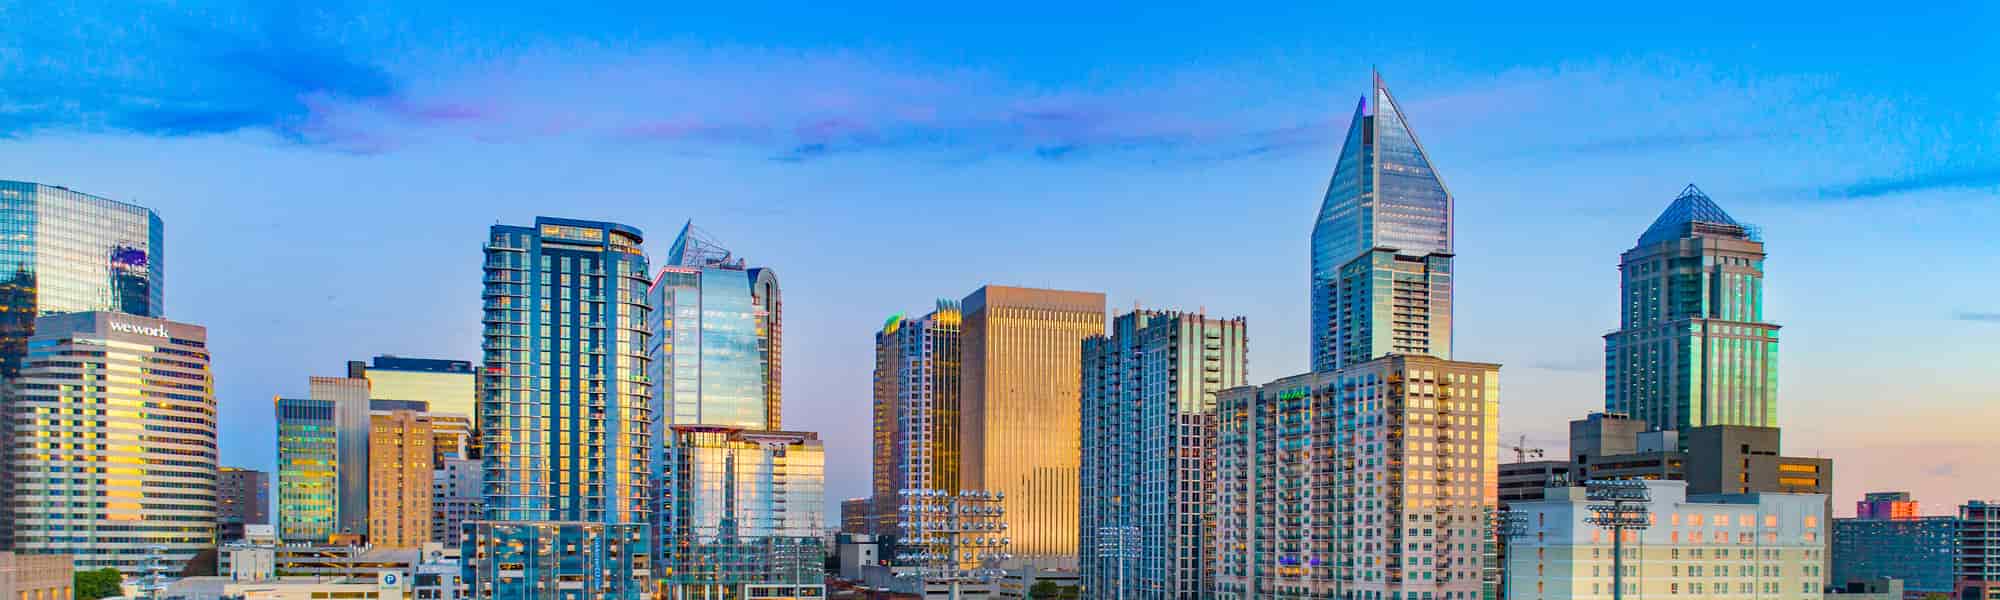 Charlotte, NC Real Estate Market Trends & Analysis FortuneBuilders